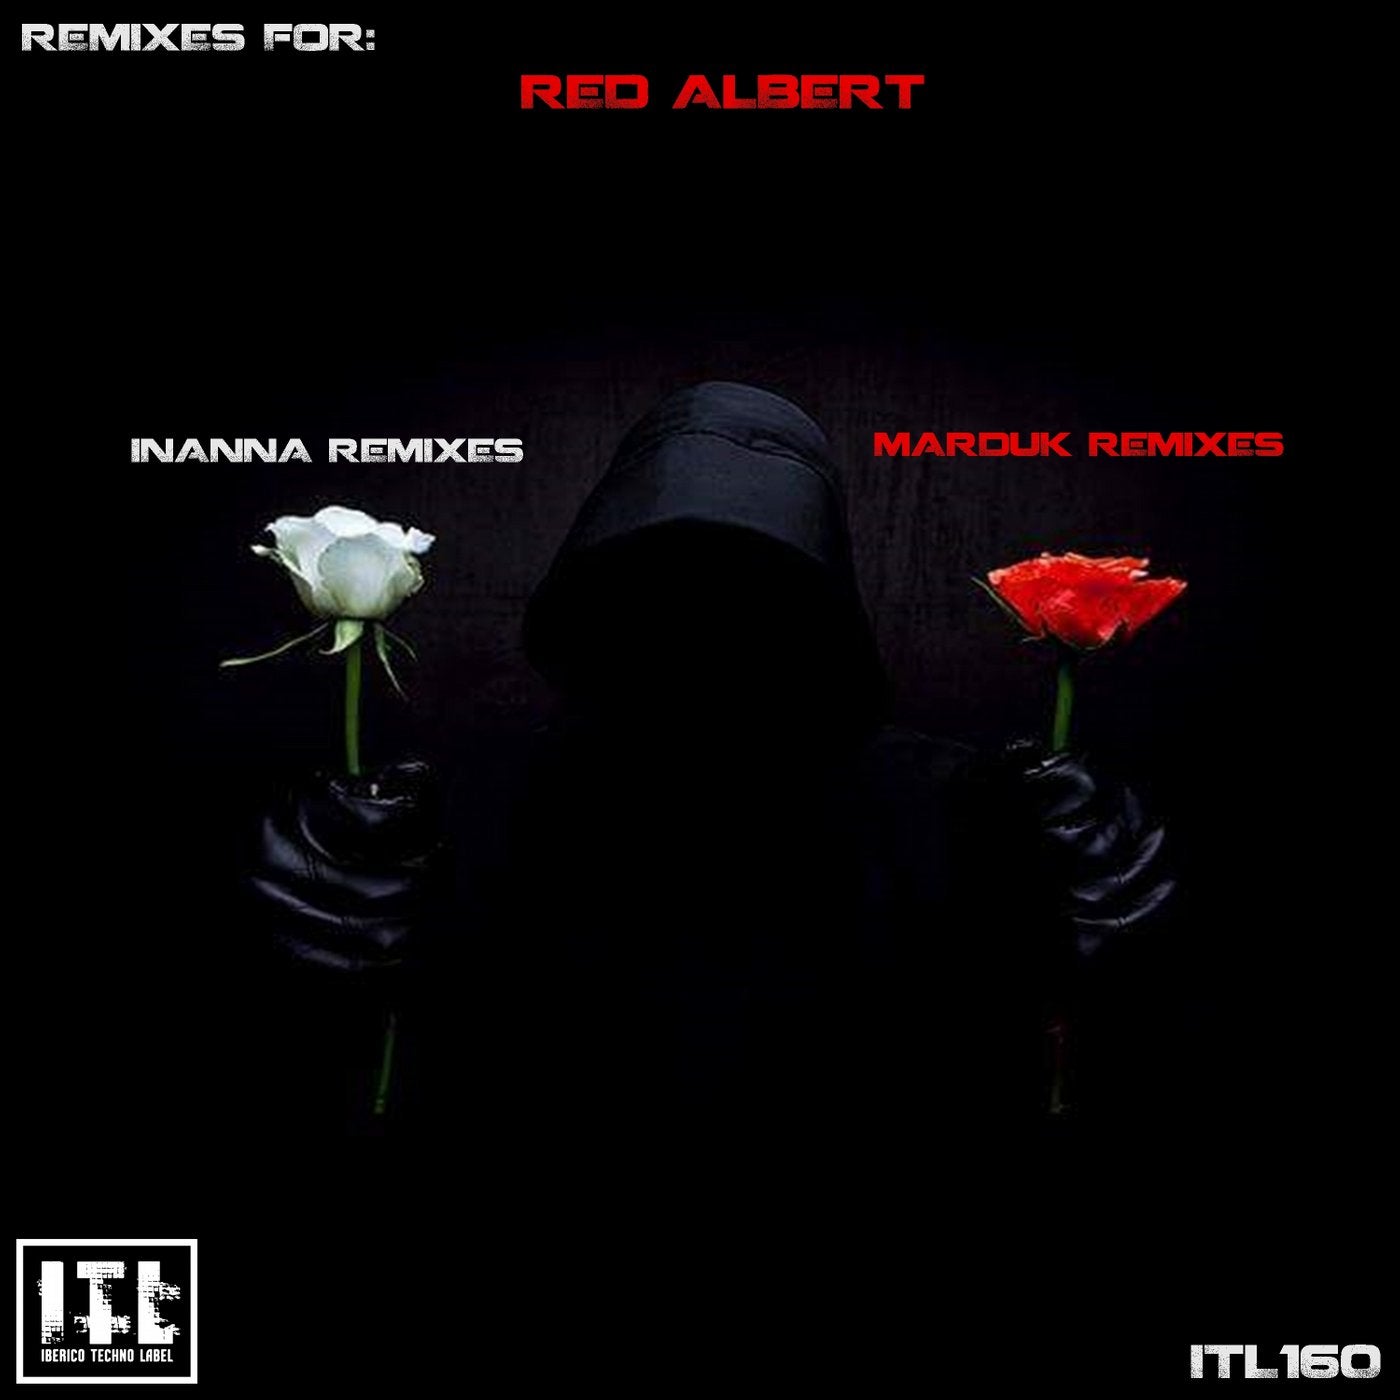 Remixes For Red Albert